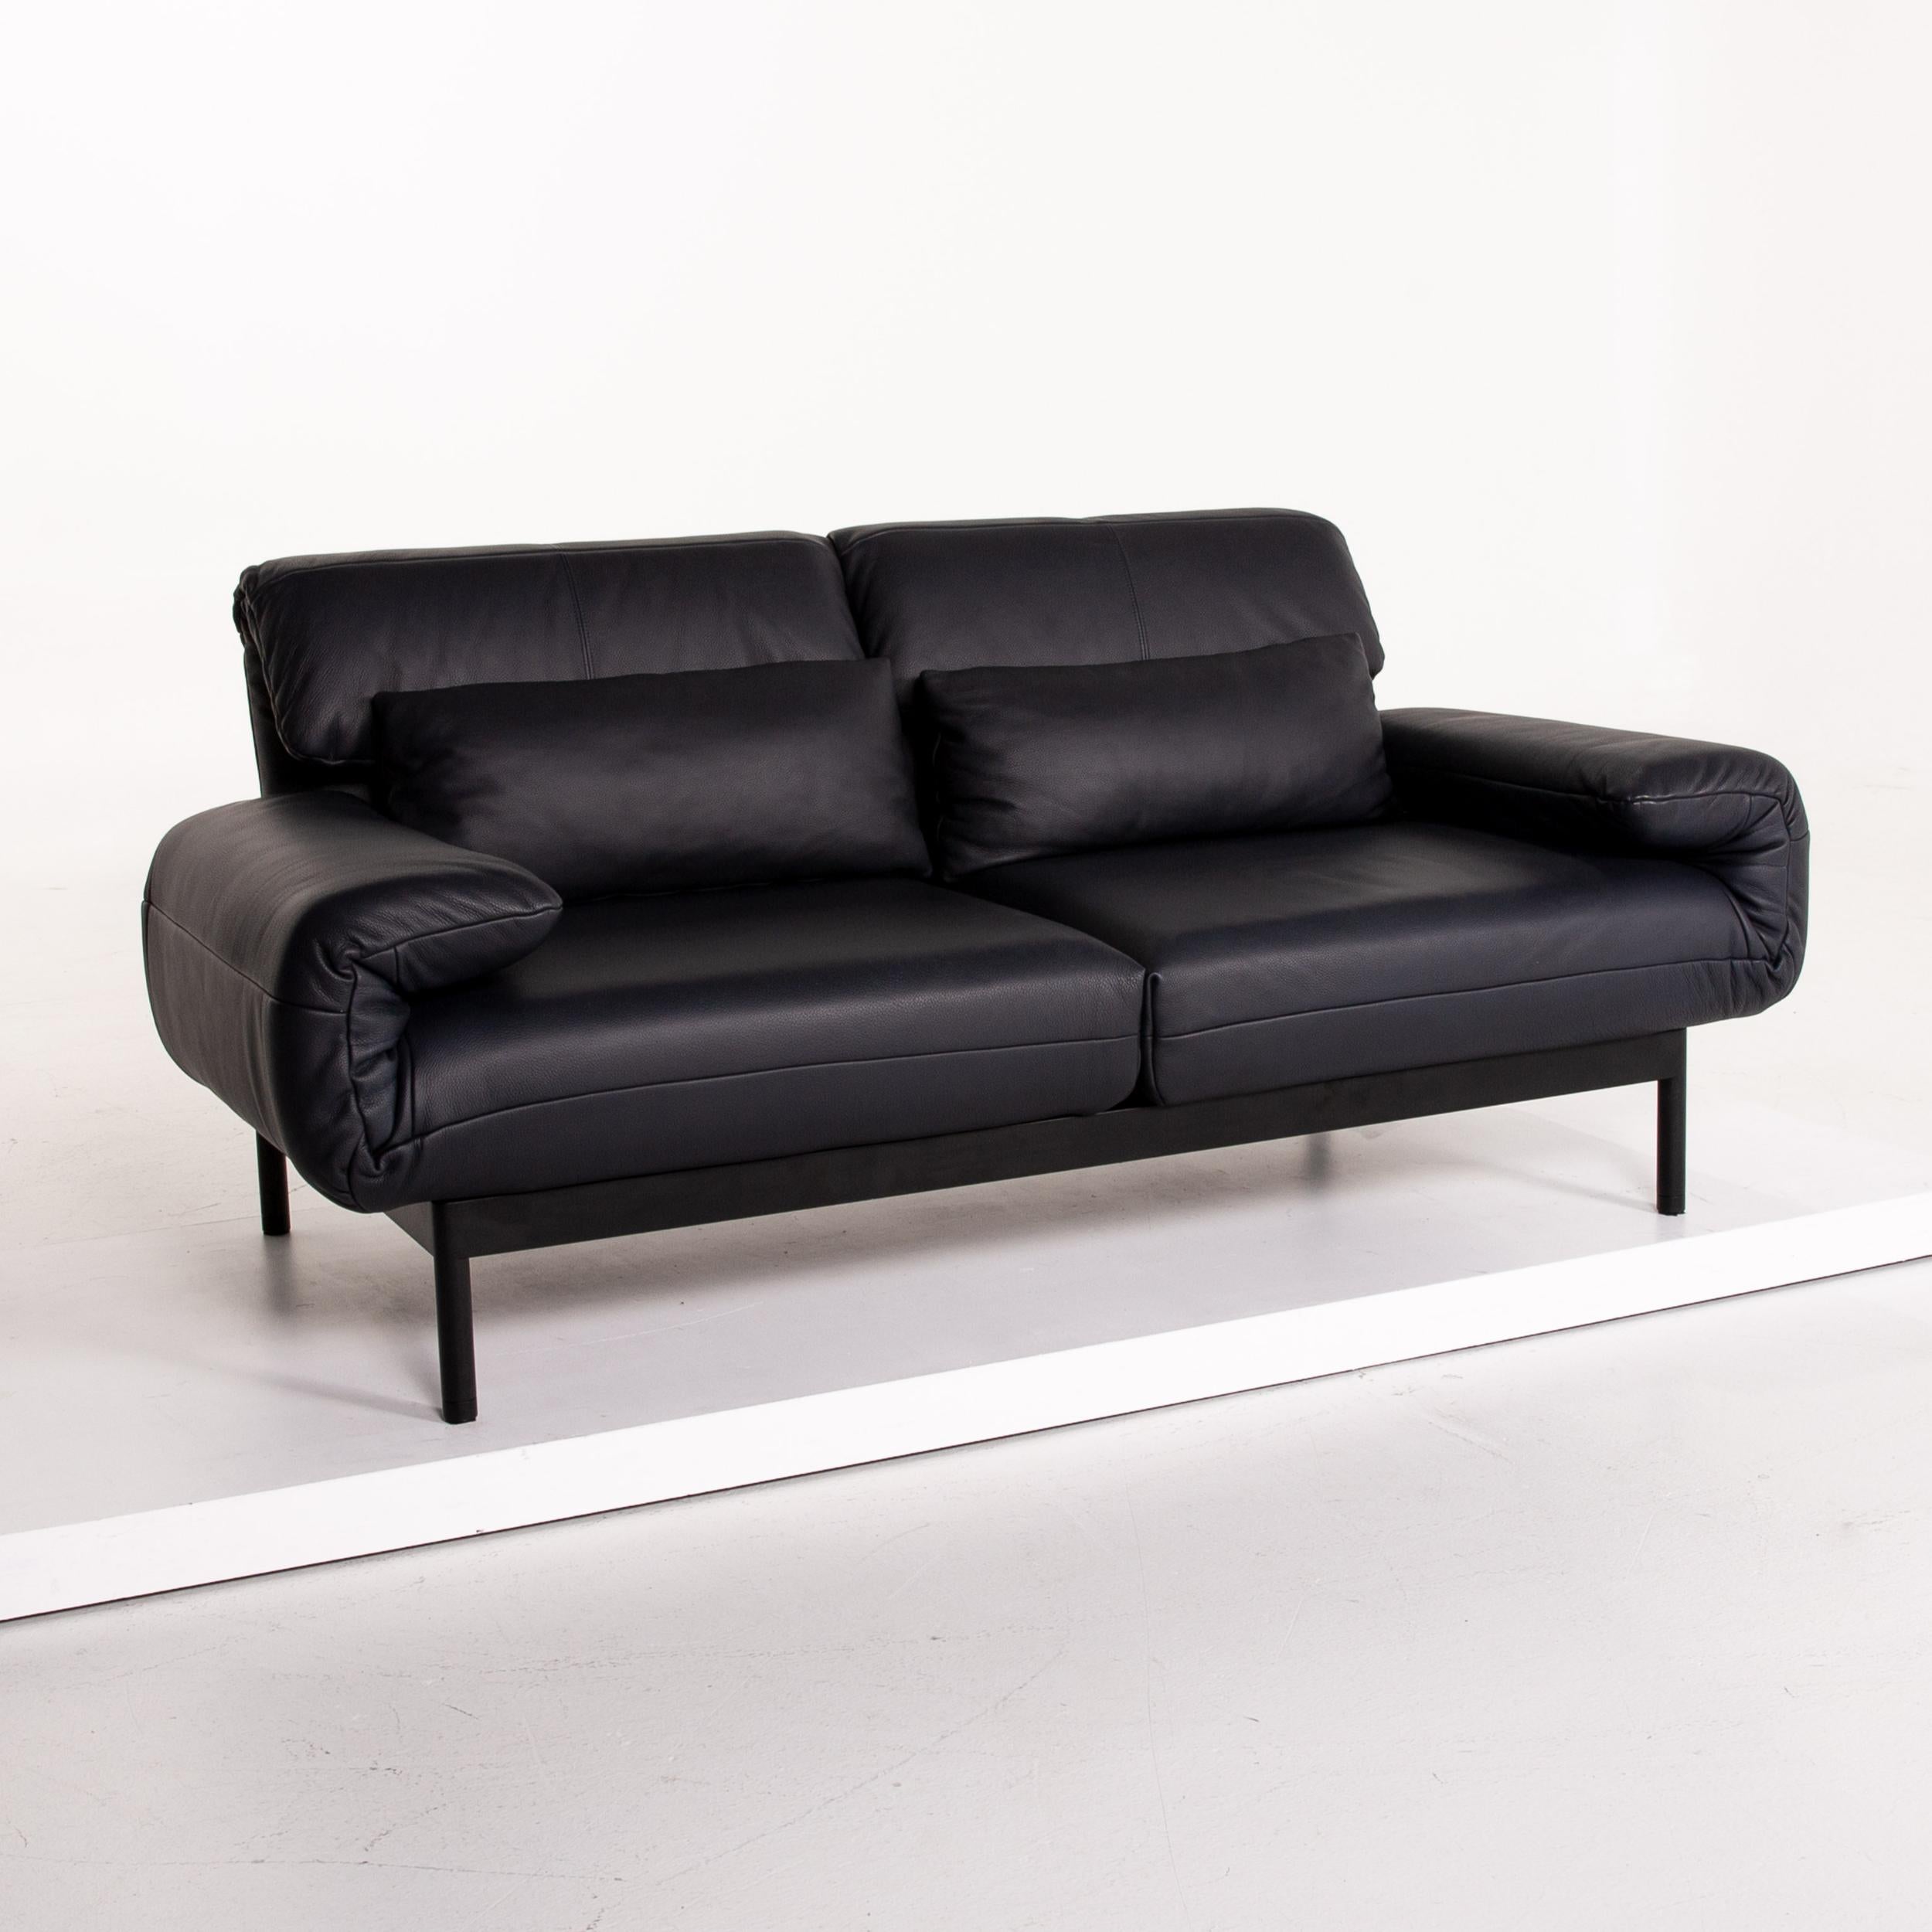 Rolf Benz Plura Leather Sofa Dark Blue Blue Two-Seat Function Sofa Bed Sleep 3